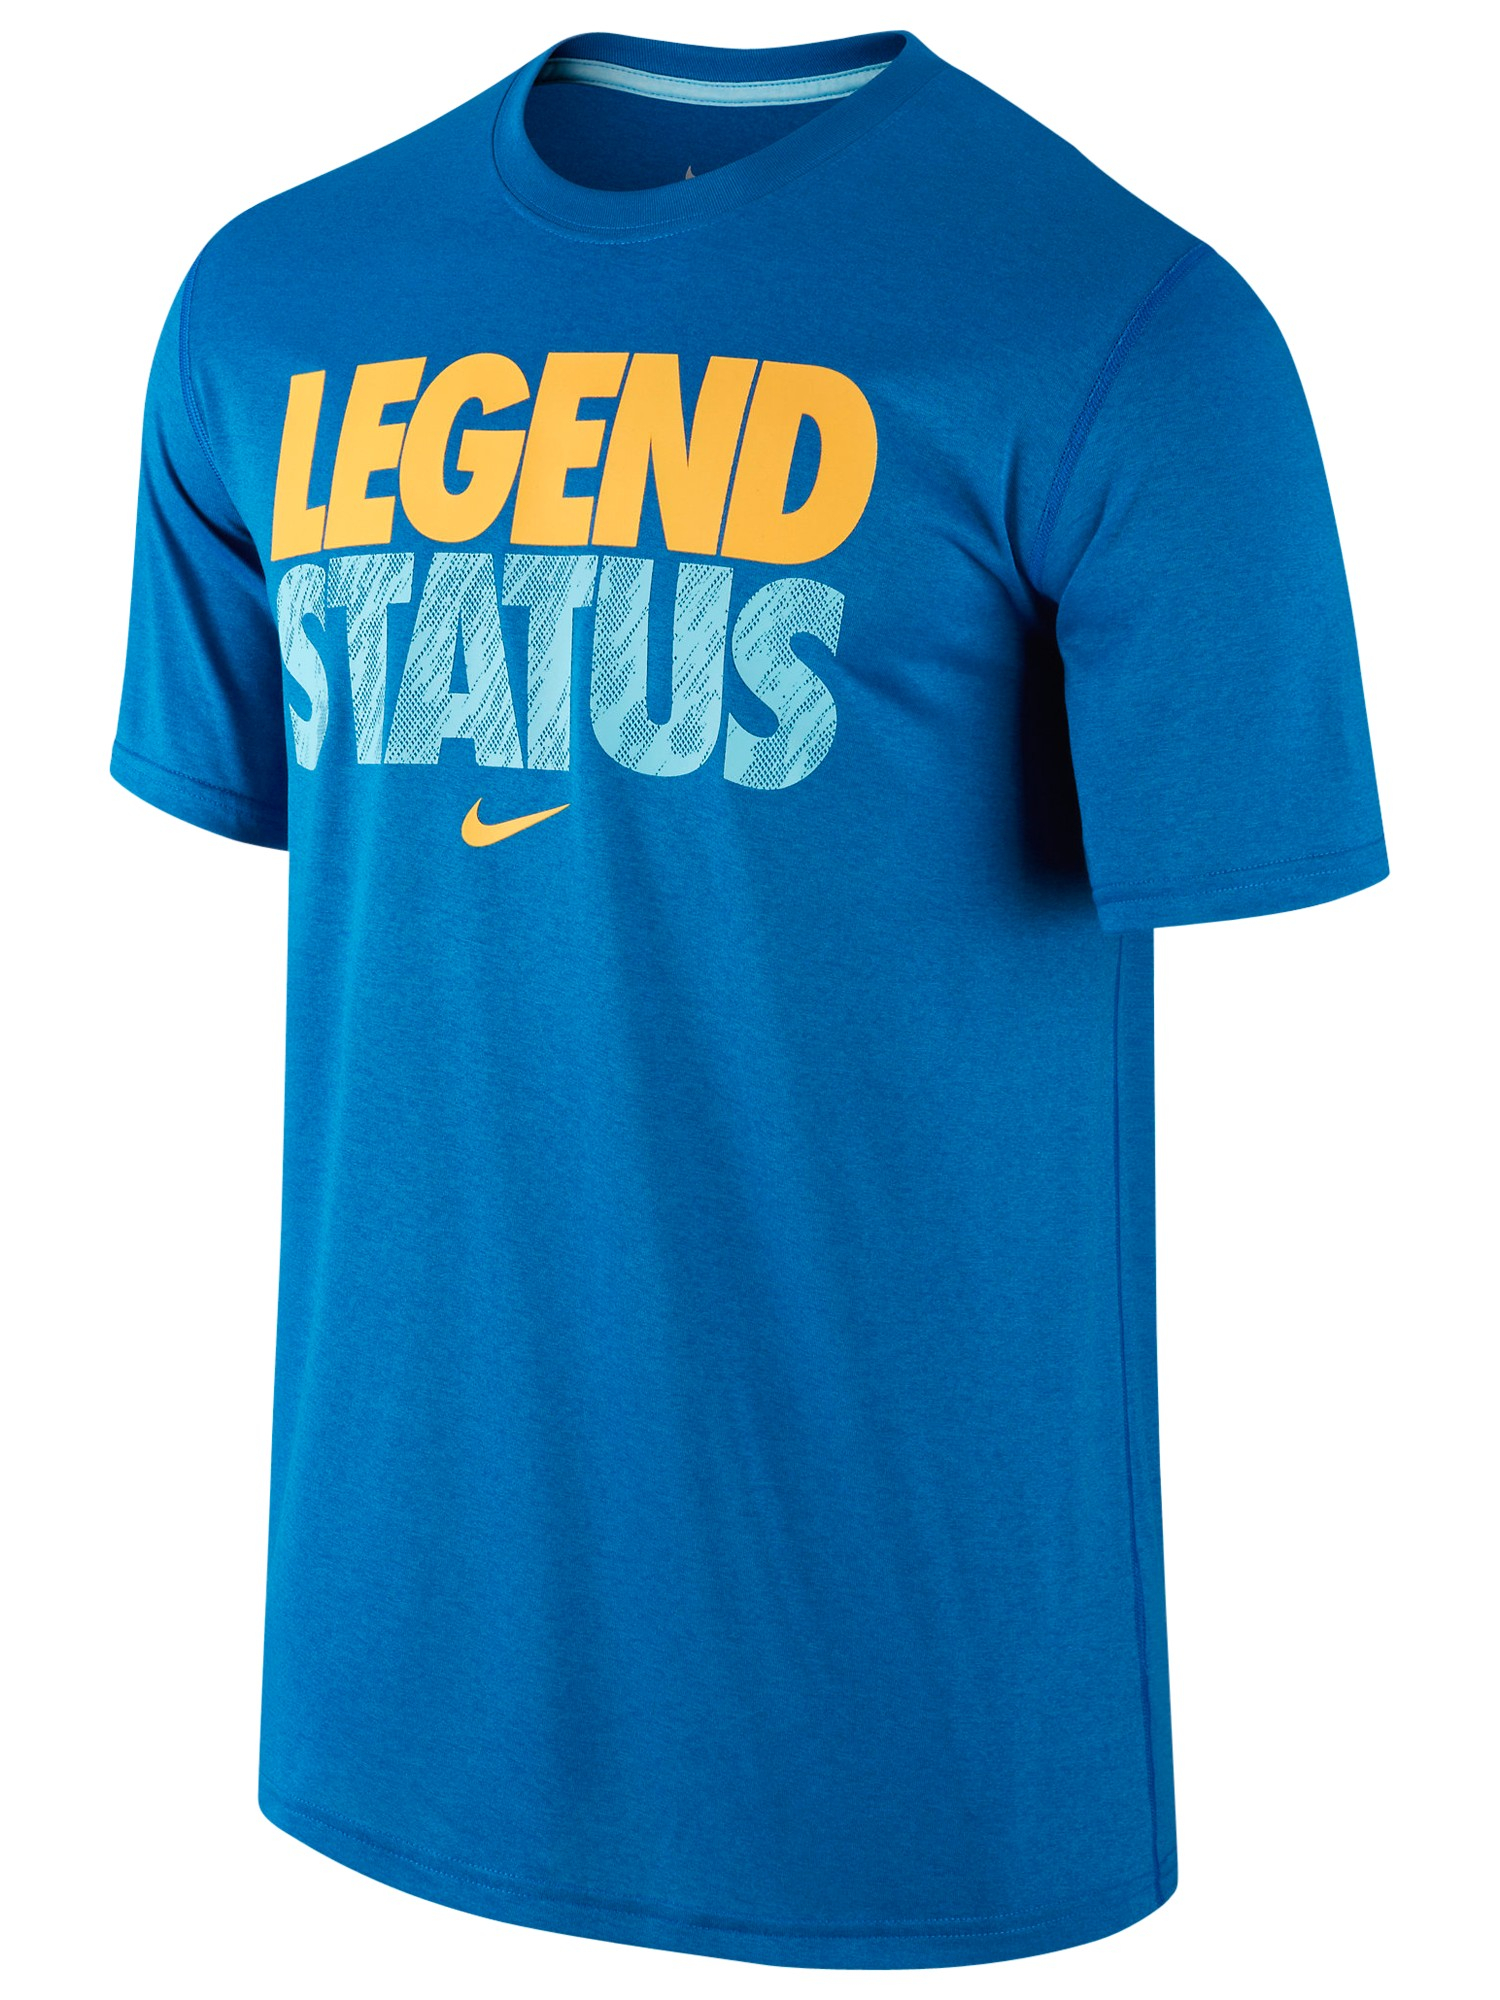 nike legend status t shirt